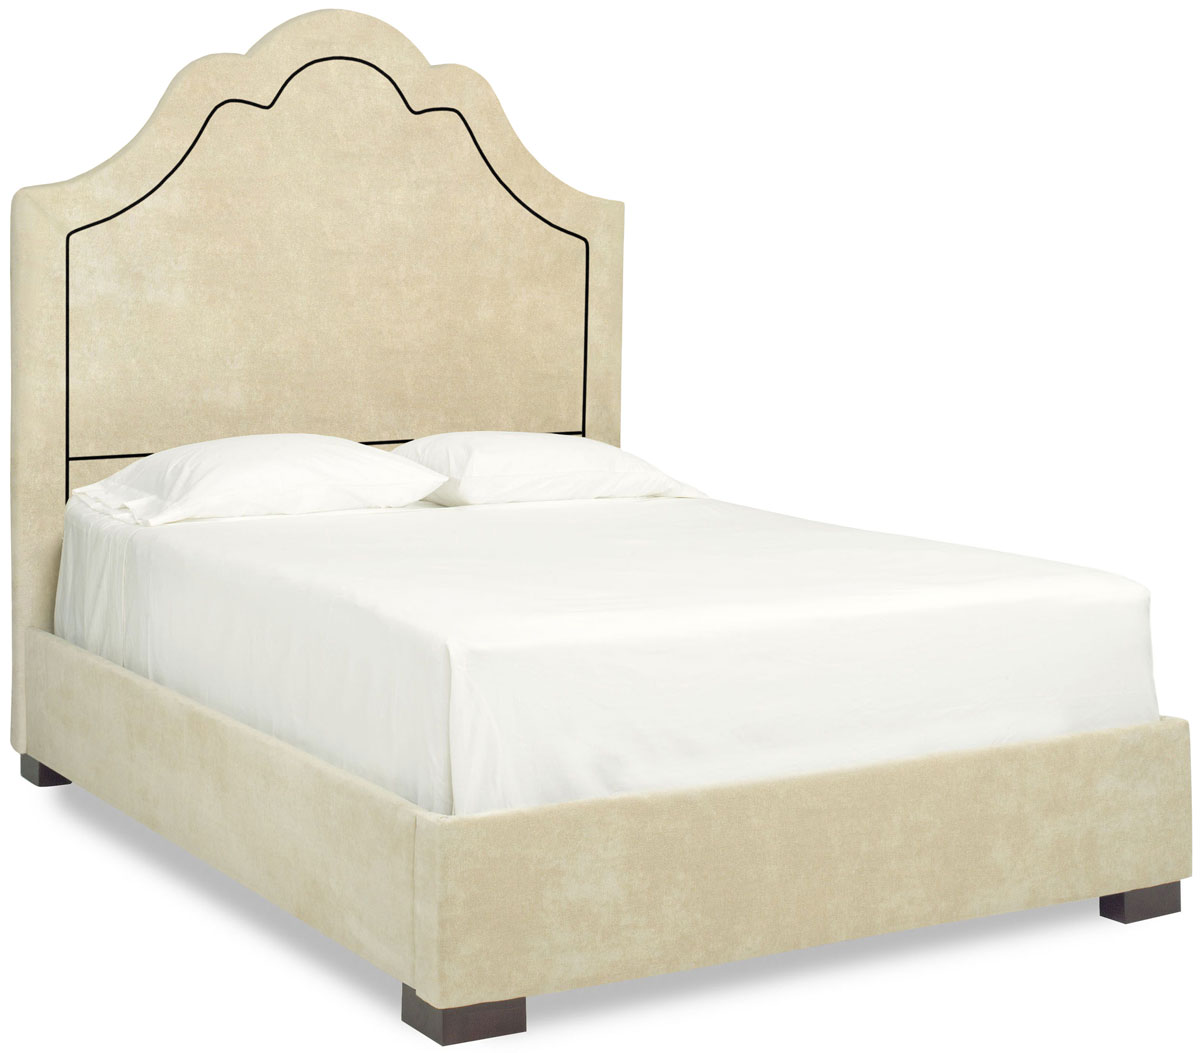 Zurro Bed with Plain Headboard